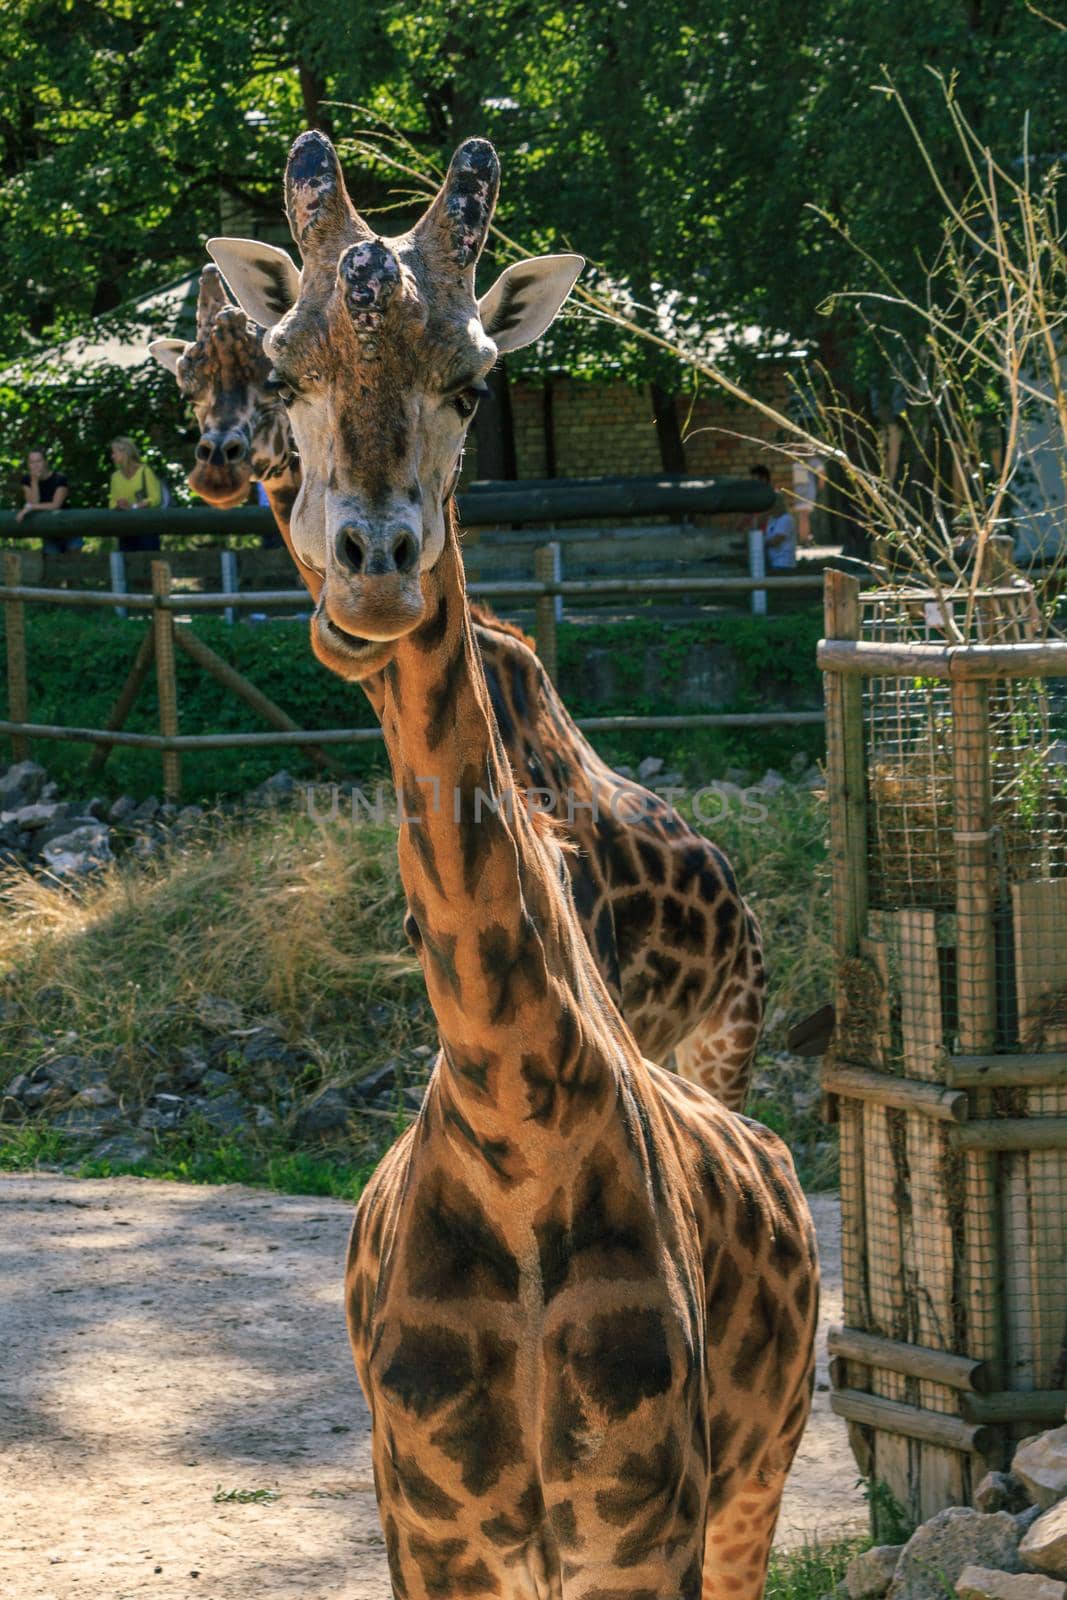 Two Giraffe rothschildi at Riga zoo, long neck variegated animals